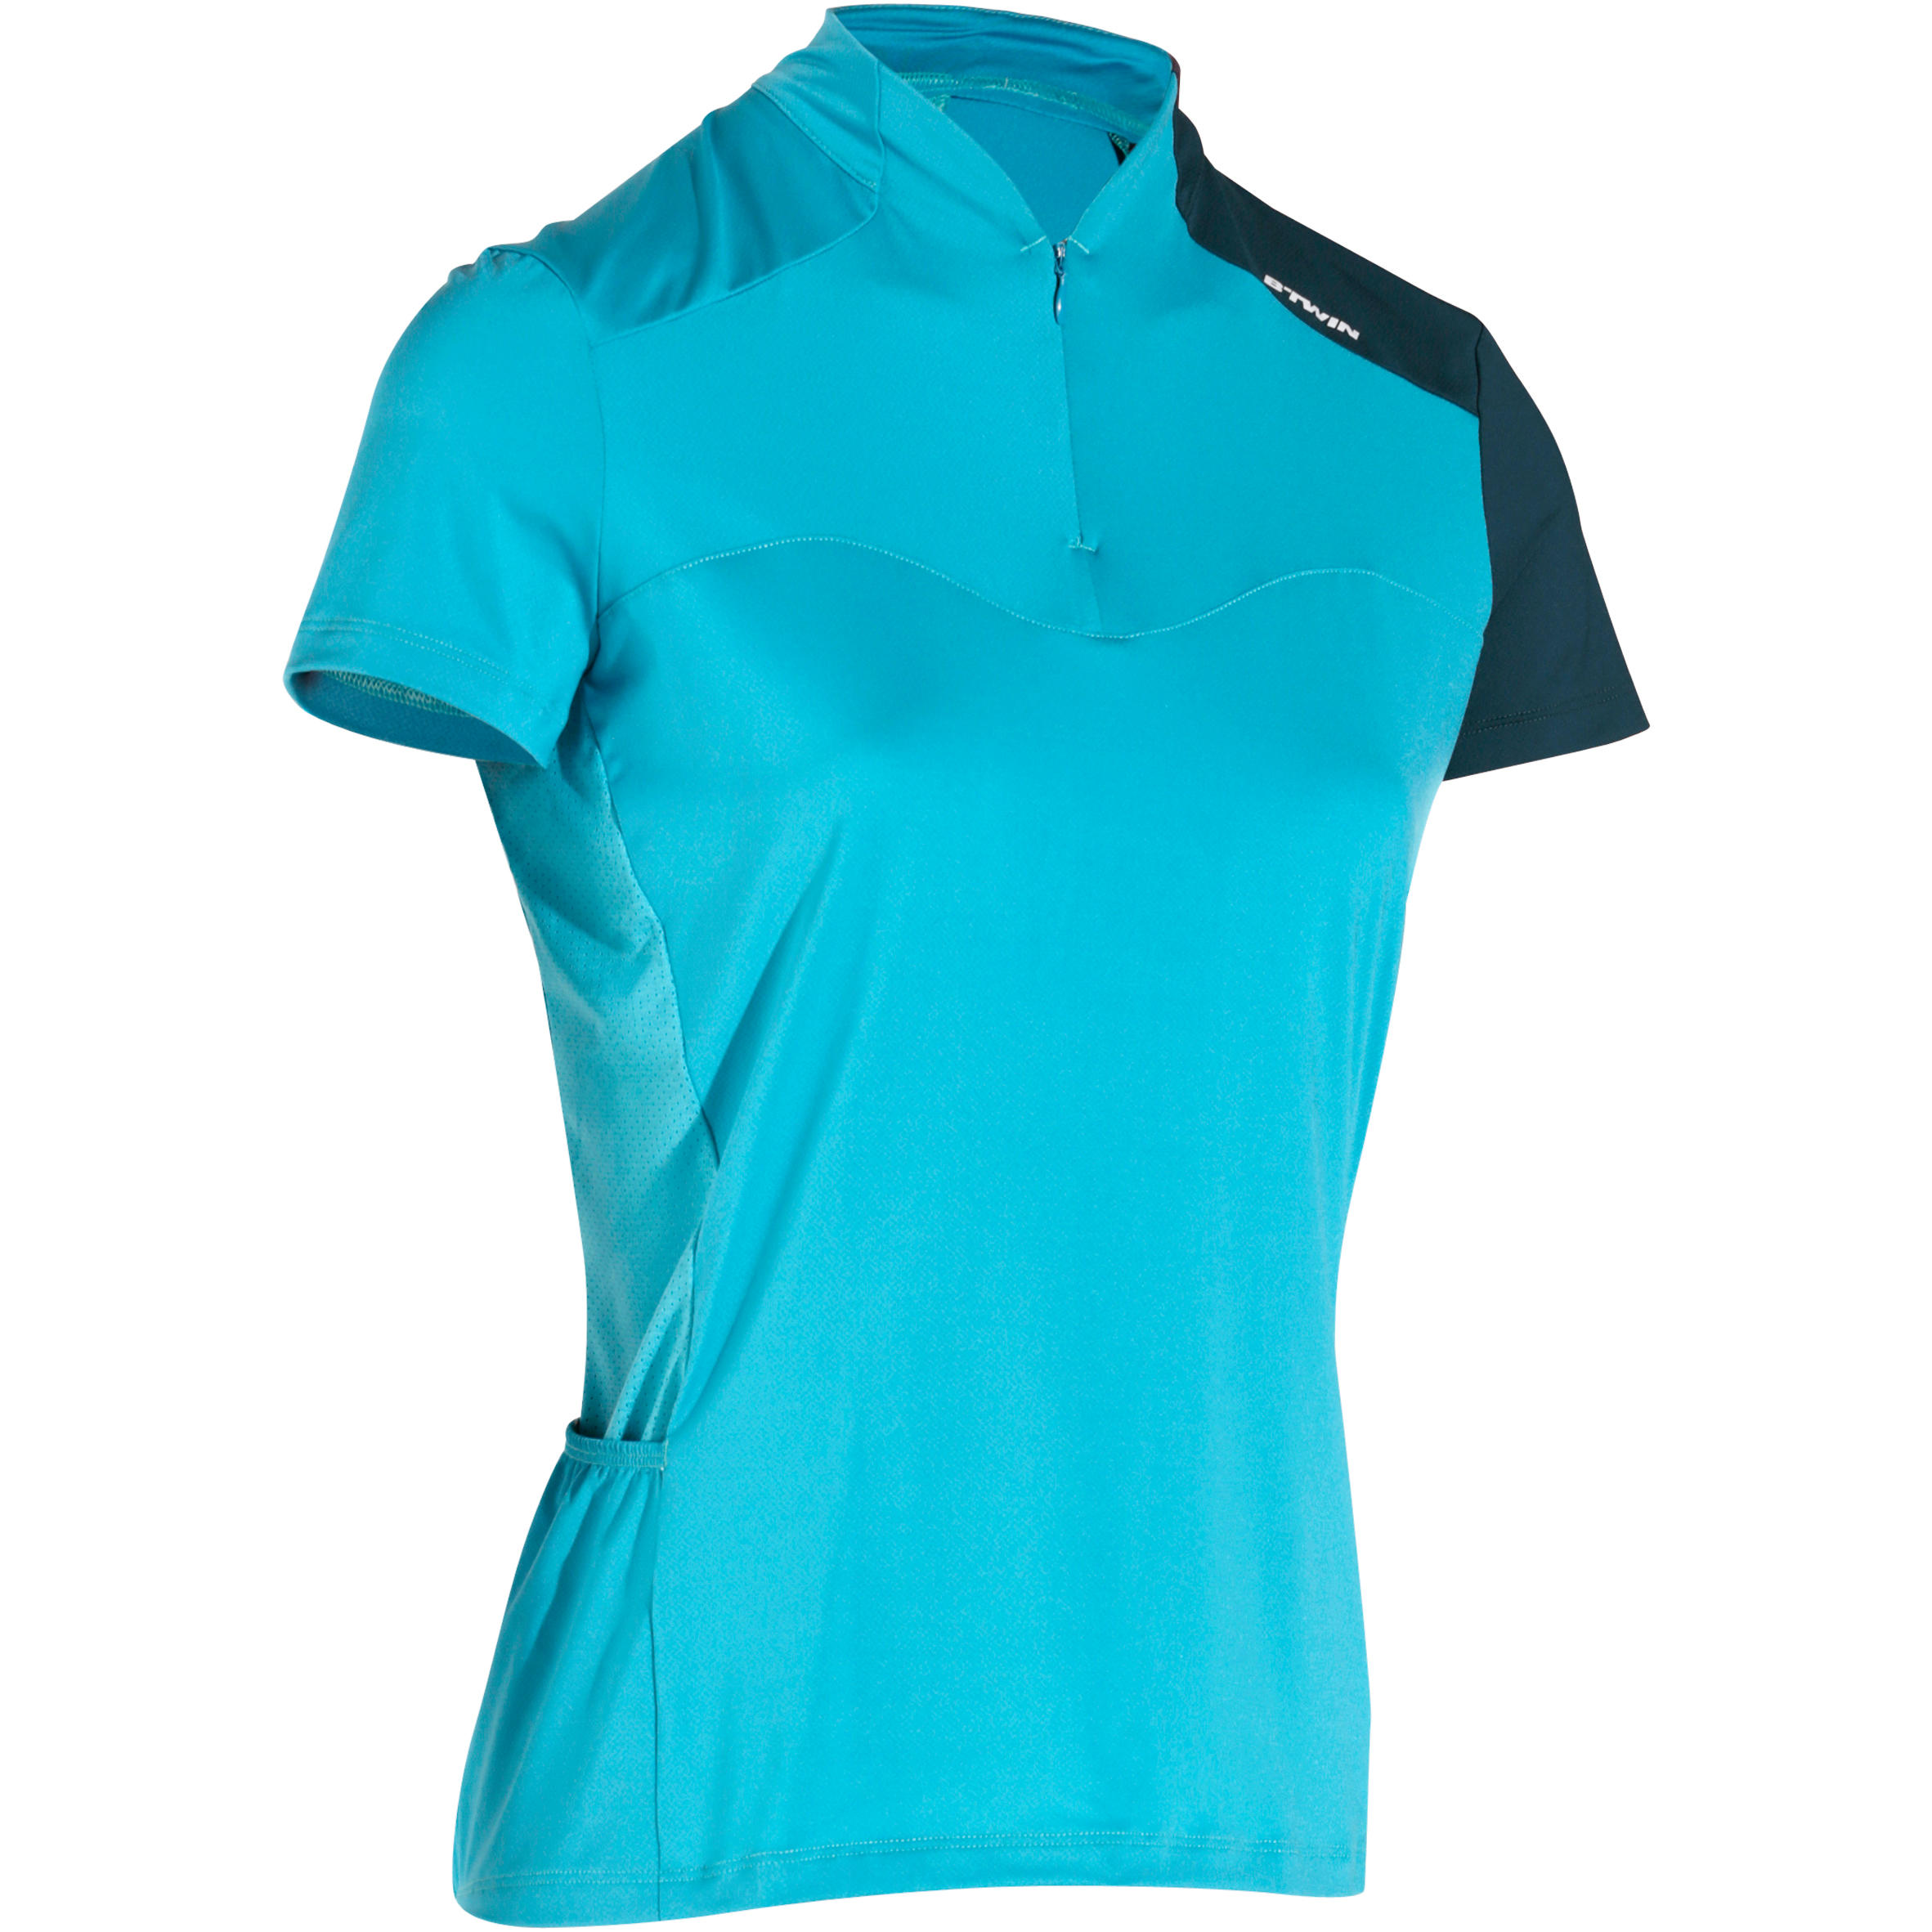 TRIBAN 500 Women's Short Sleeve Cycling Jersey - Blue